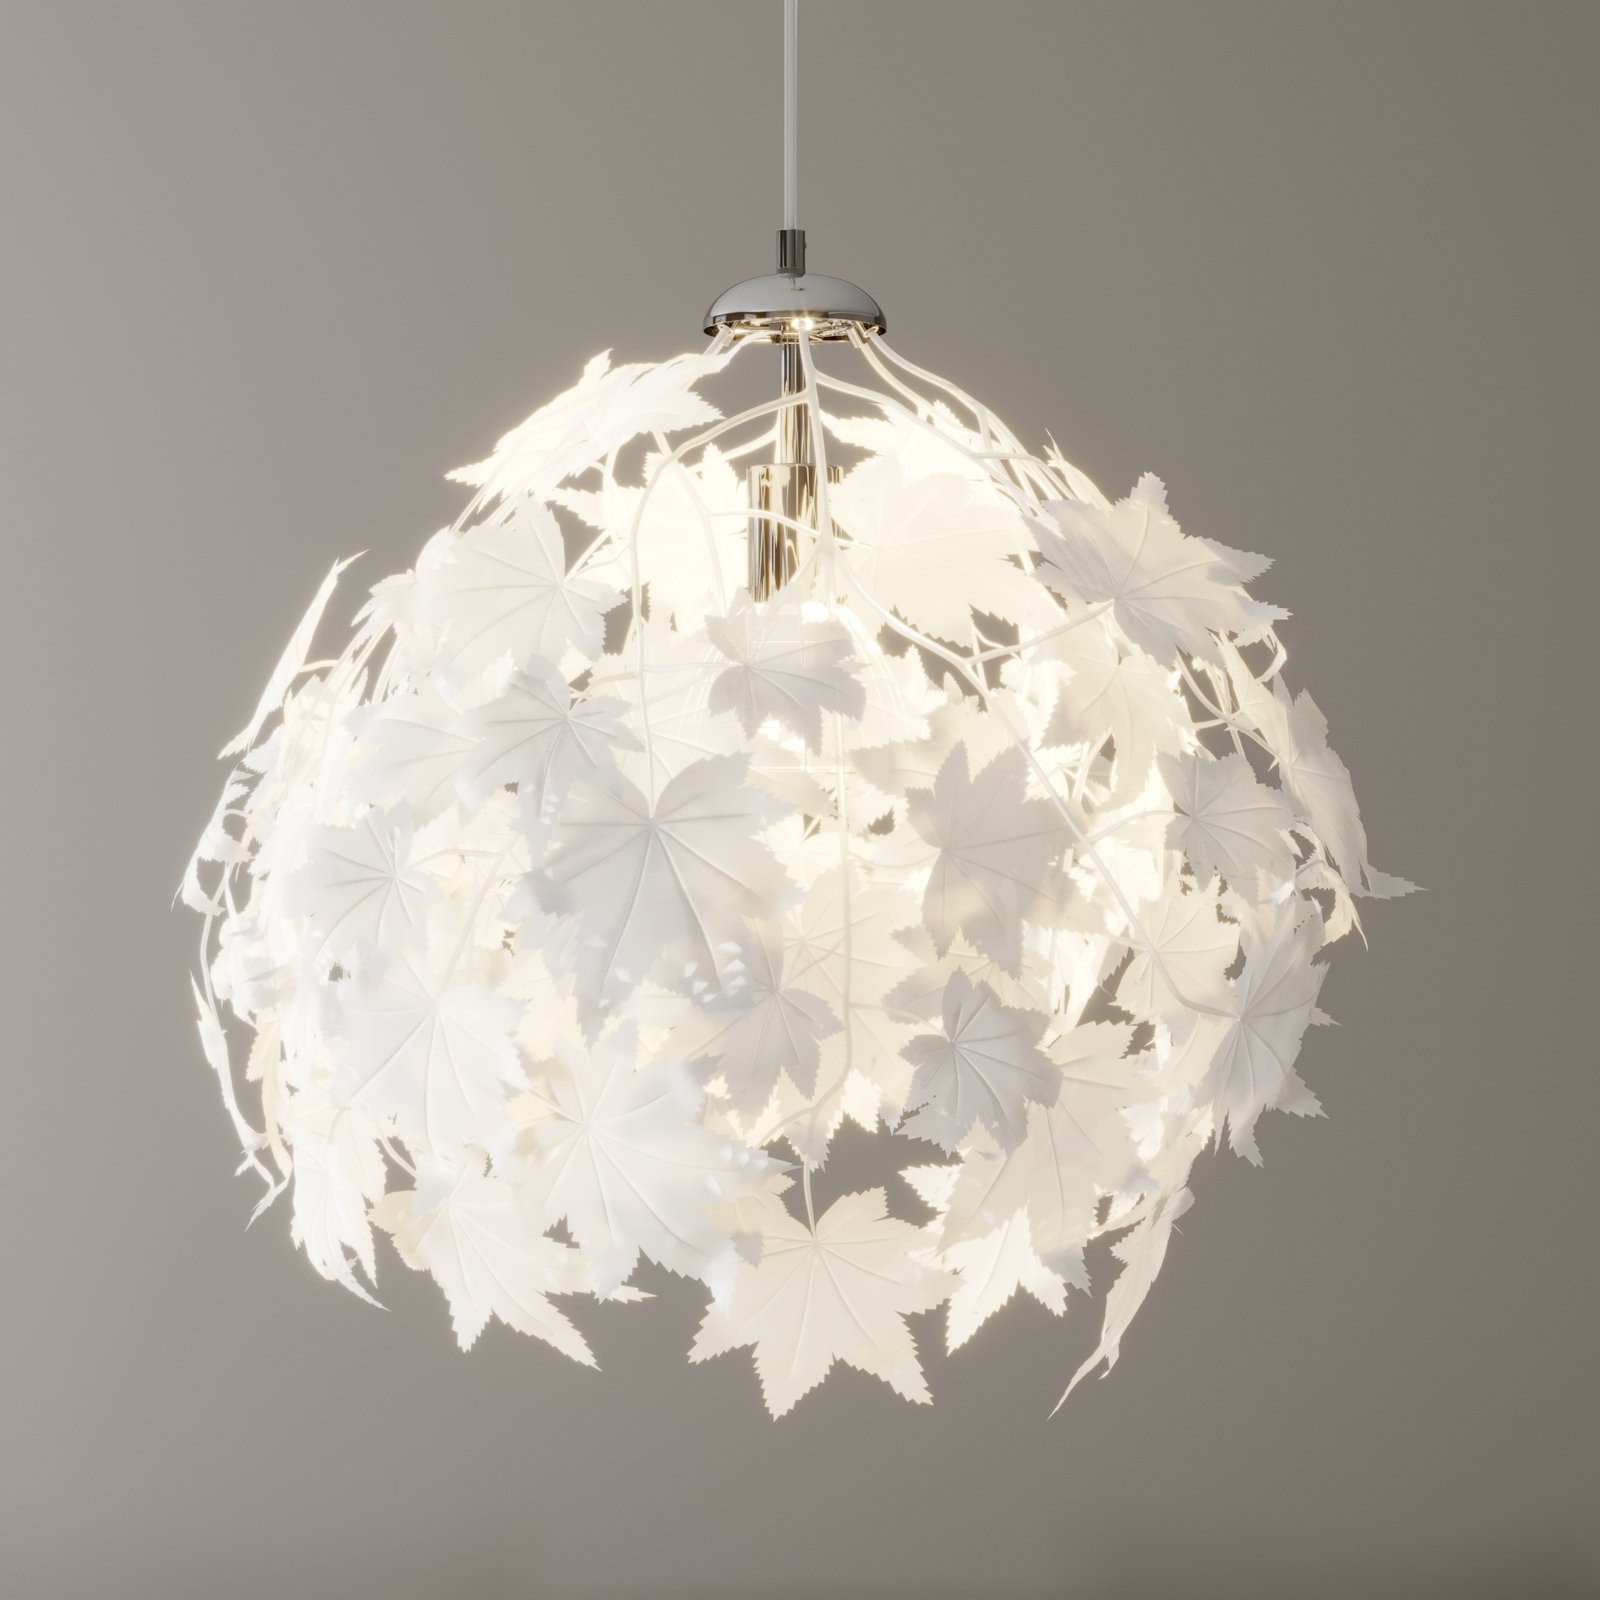 Pendant lamp Maple with leaf design